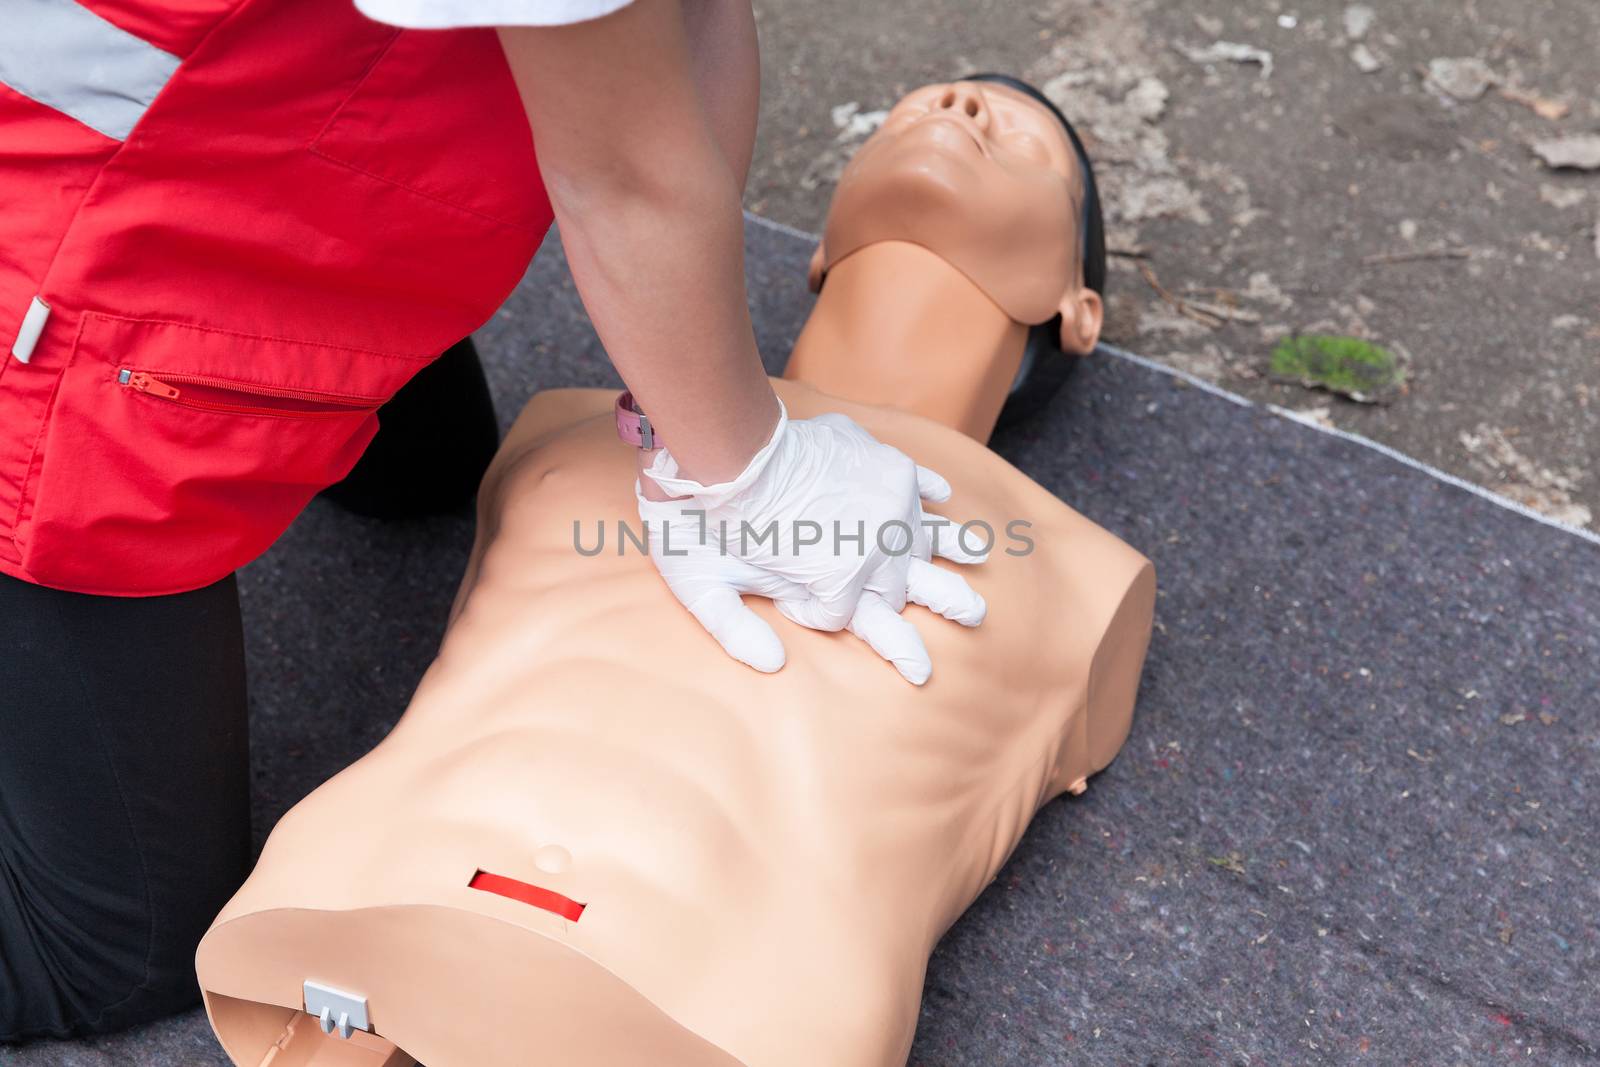 Cardiopulmonary resuscitation - CPR. First aid training detail. Cardiac massage.